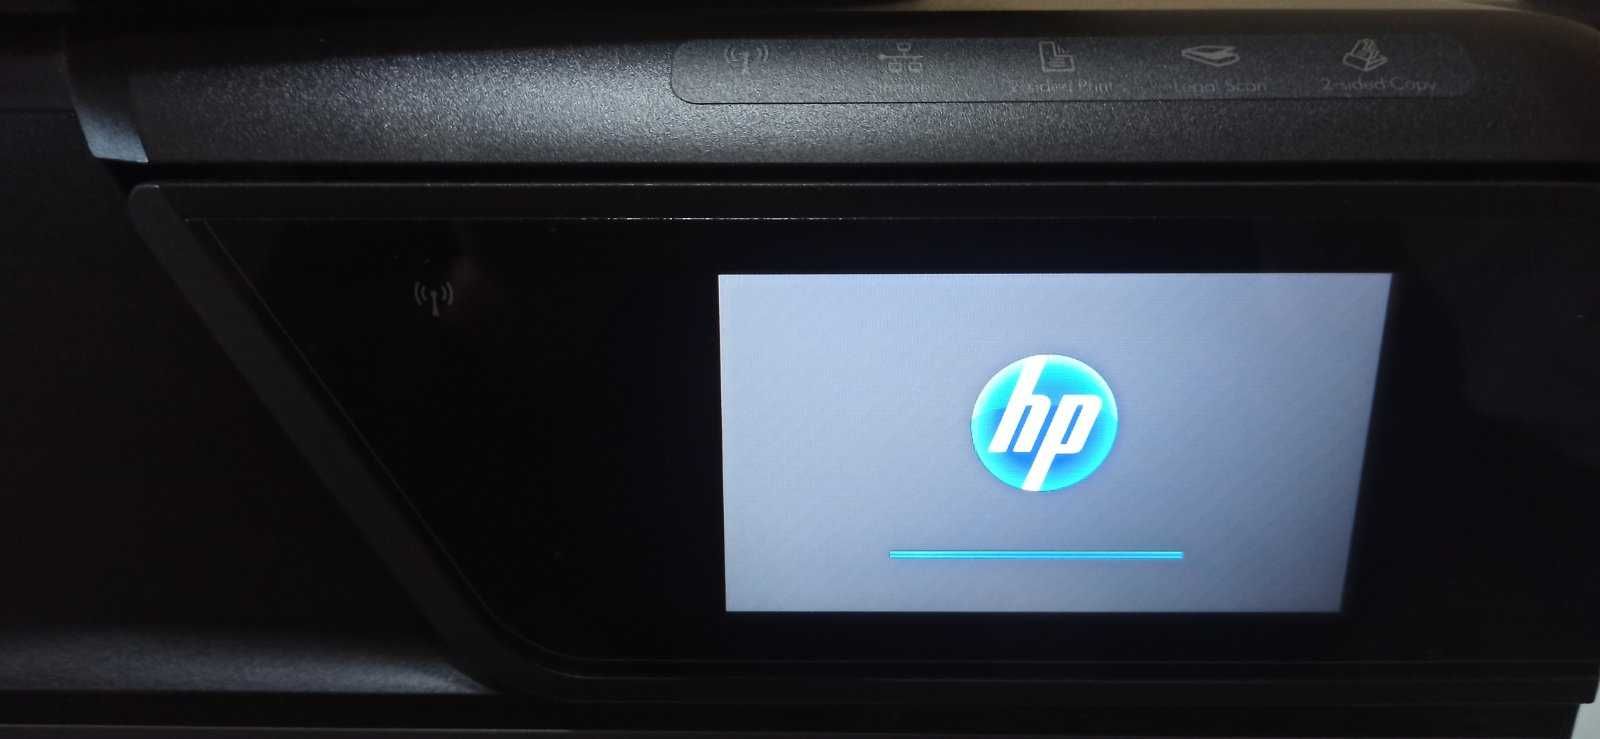 Принтер HP Officejet Pro 8600 Plus e-All-in-One